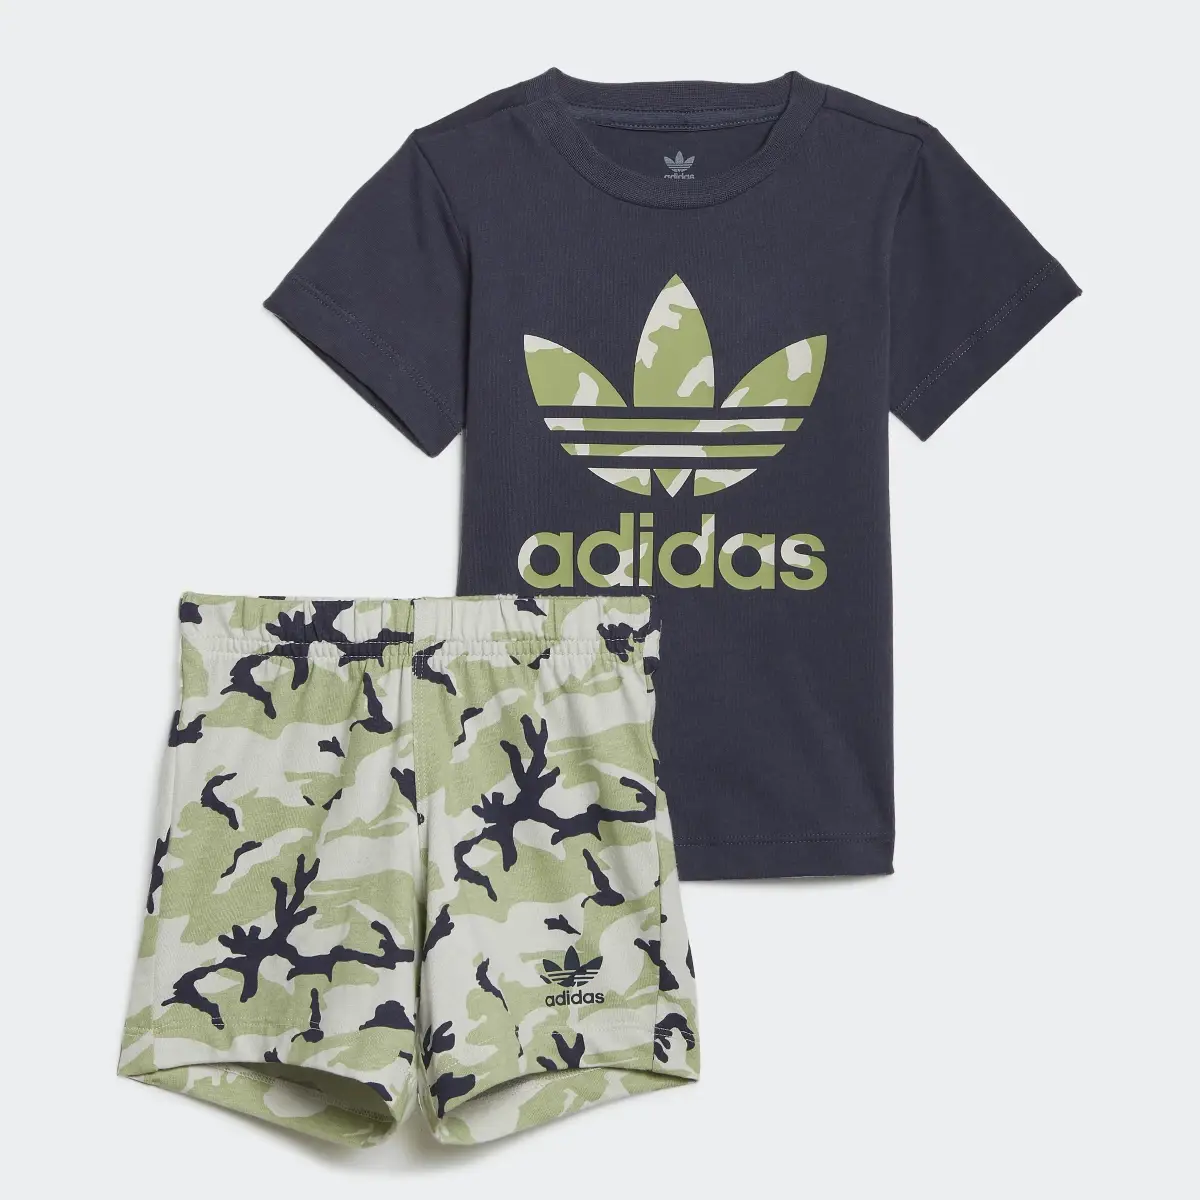 Adidas Camo Shorts and Tee Set. 2